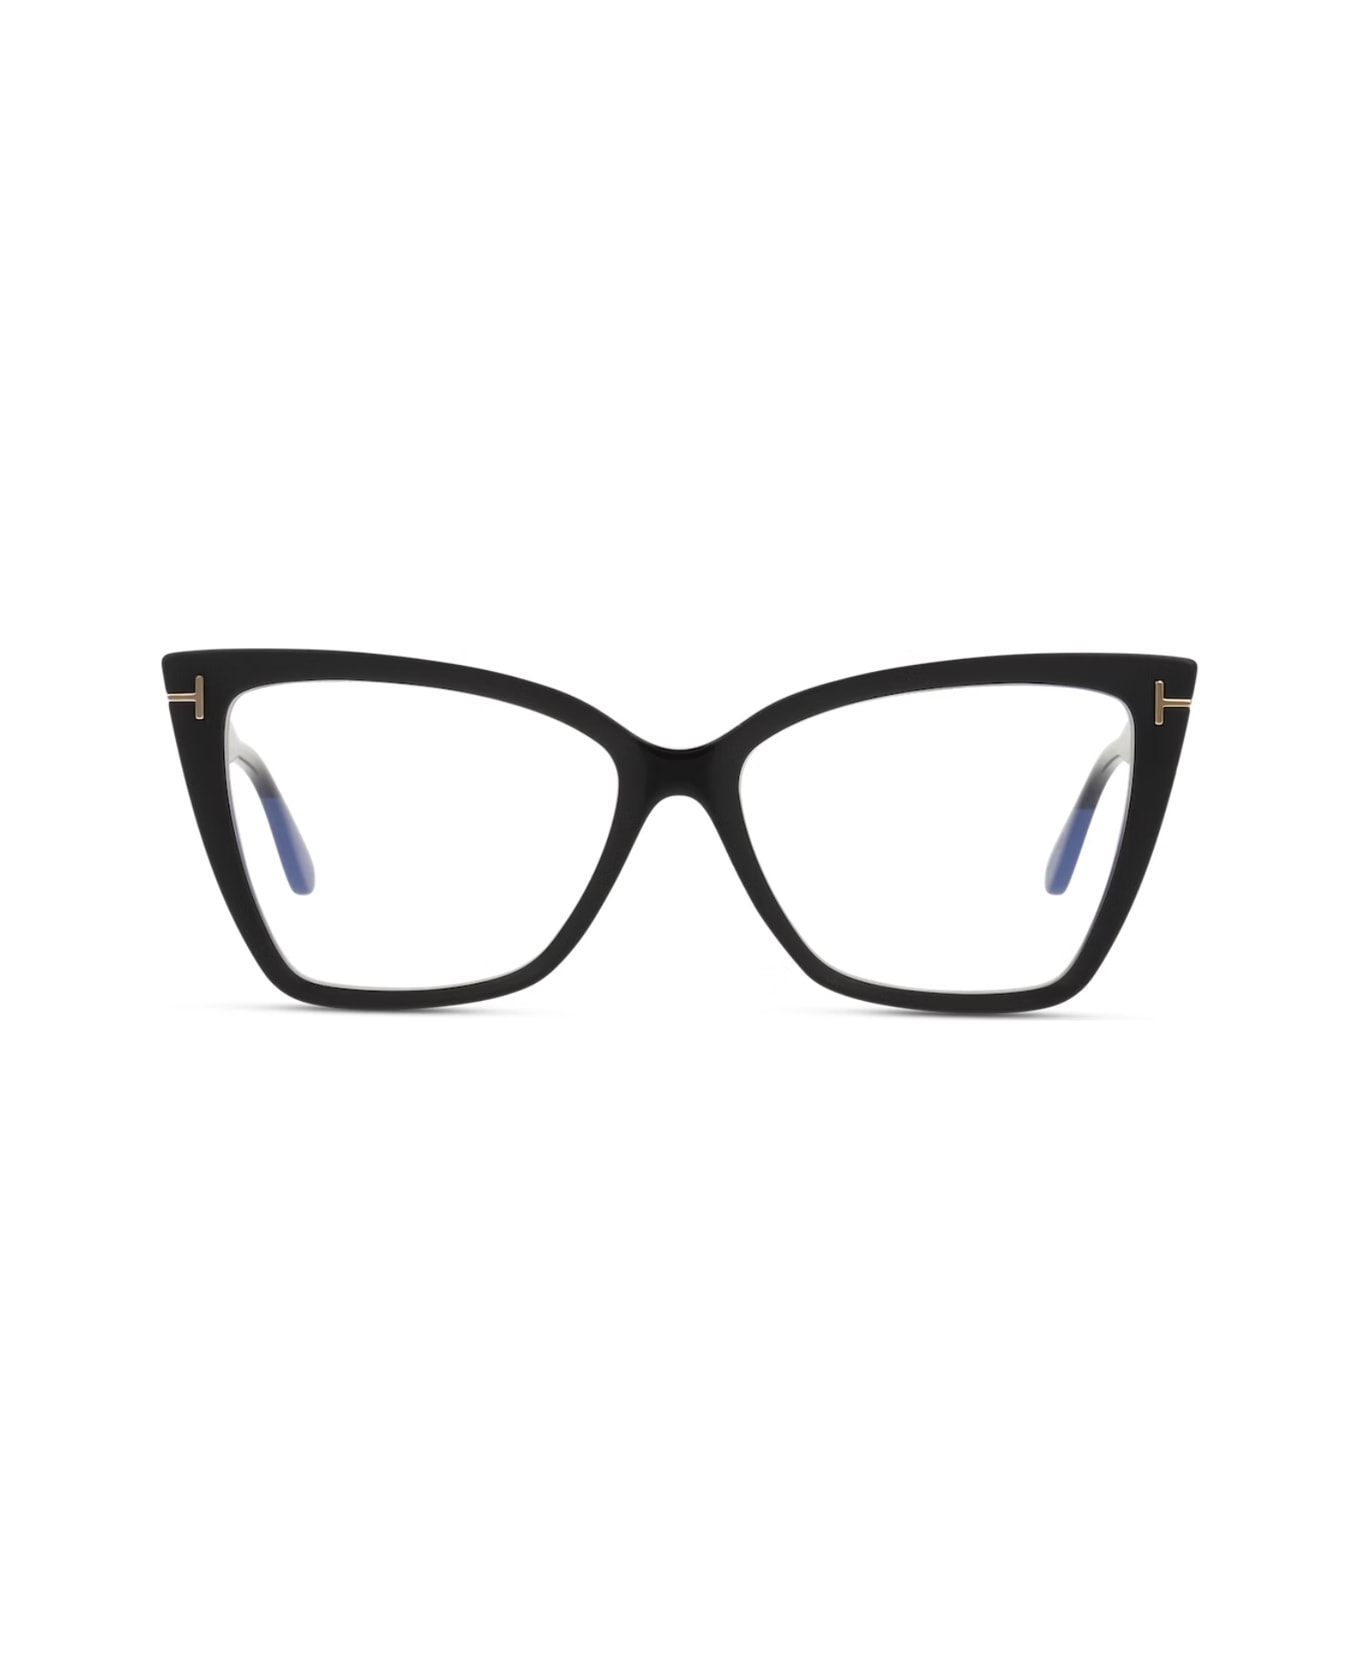 Tom Ford Eyewear Ft5844 Glasses - Nero アイウェア